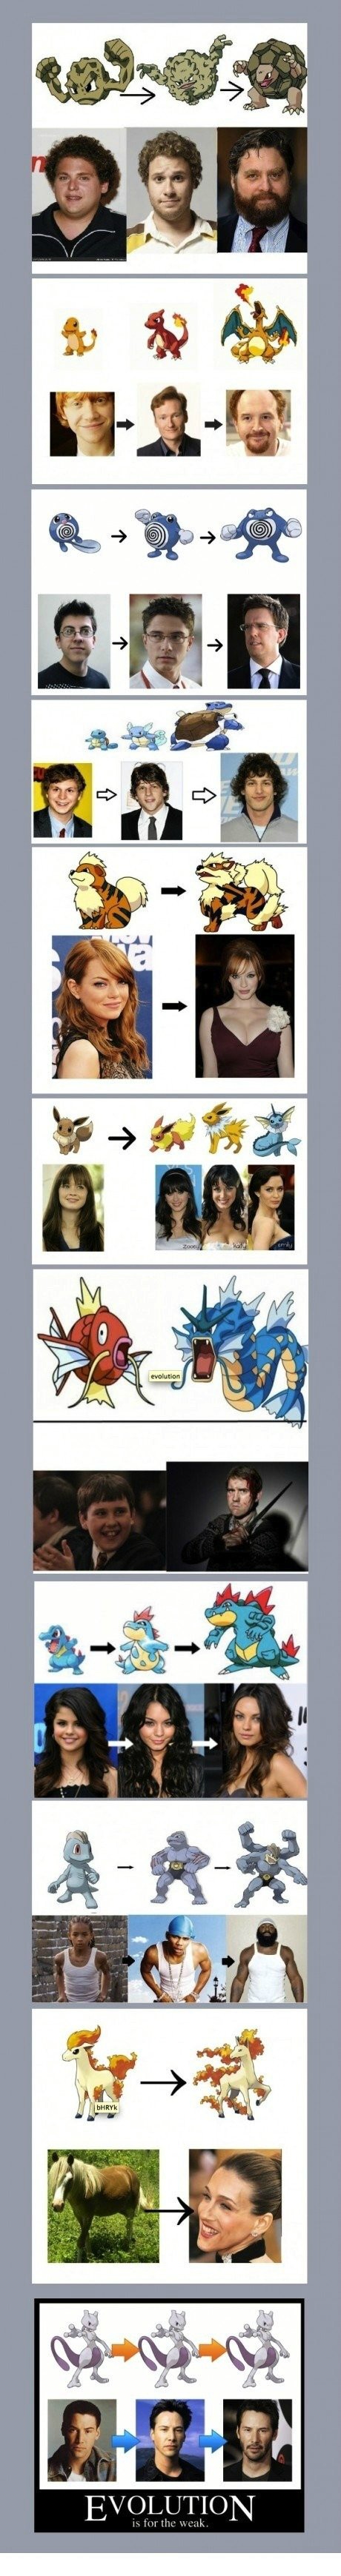 The evolution of celebrities